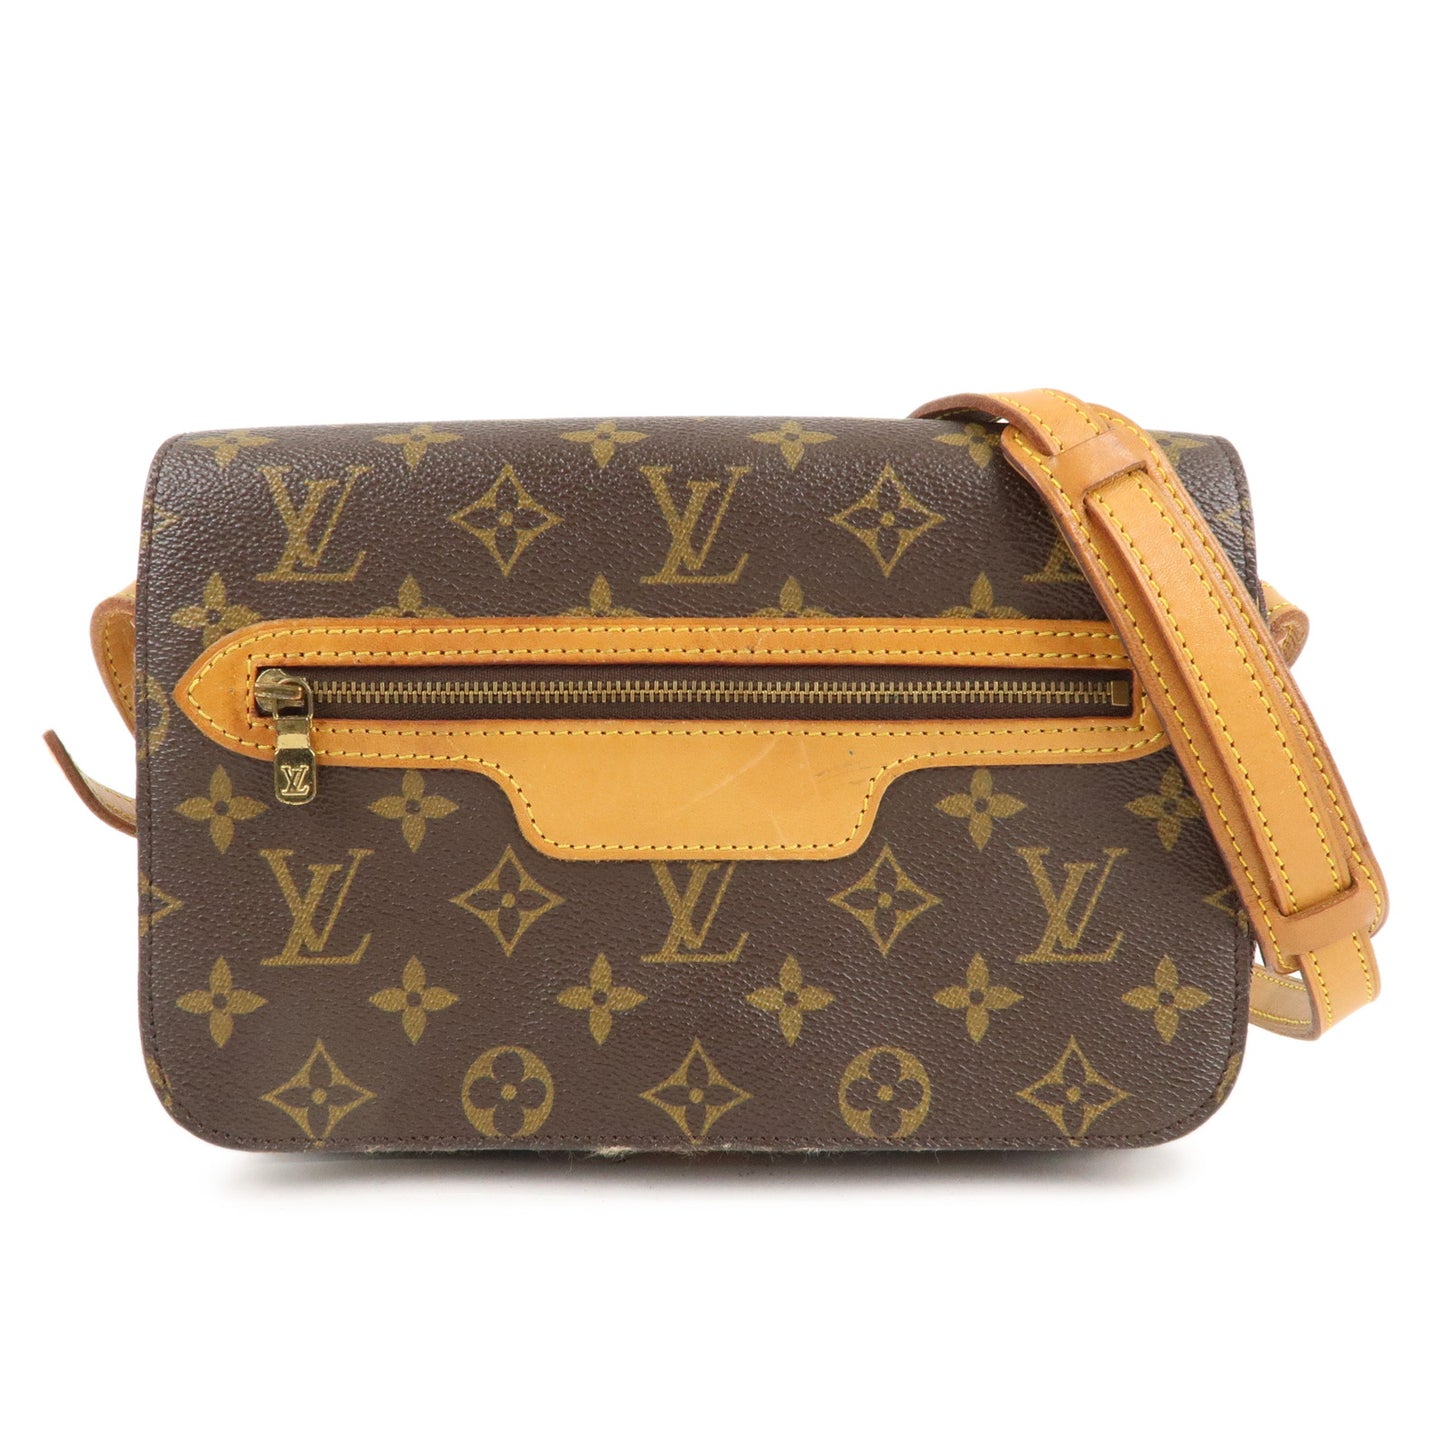 Vintage LV St. Germain  Bags, Crossbody bag, Louis vuitton